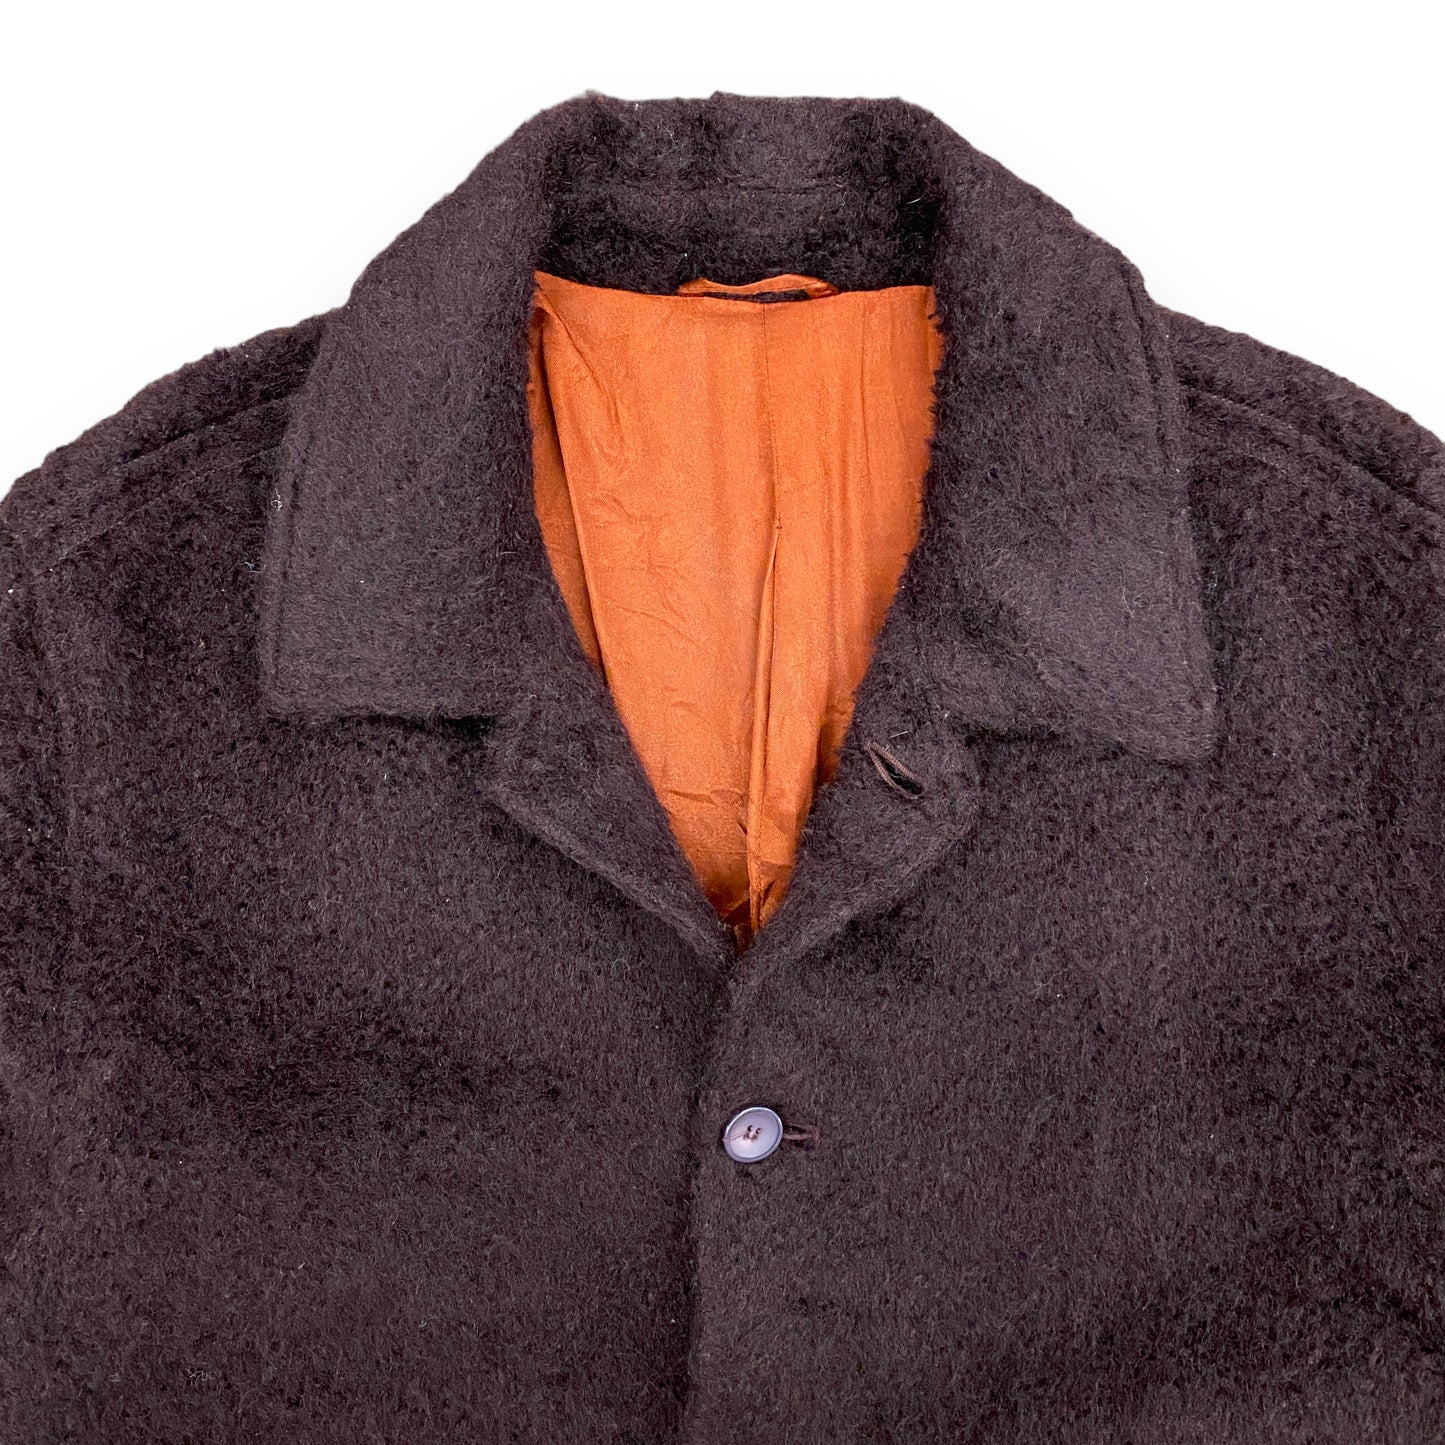 Jhane Barnes Wool Mohair Blend Dark Maroon Jacket - Size M/L